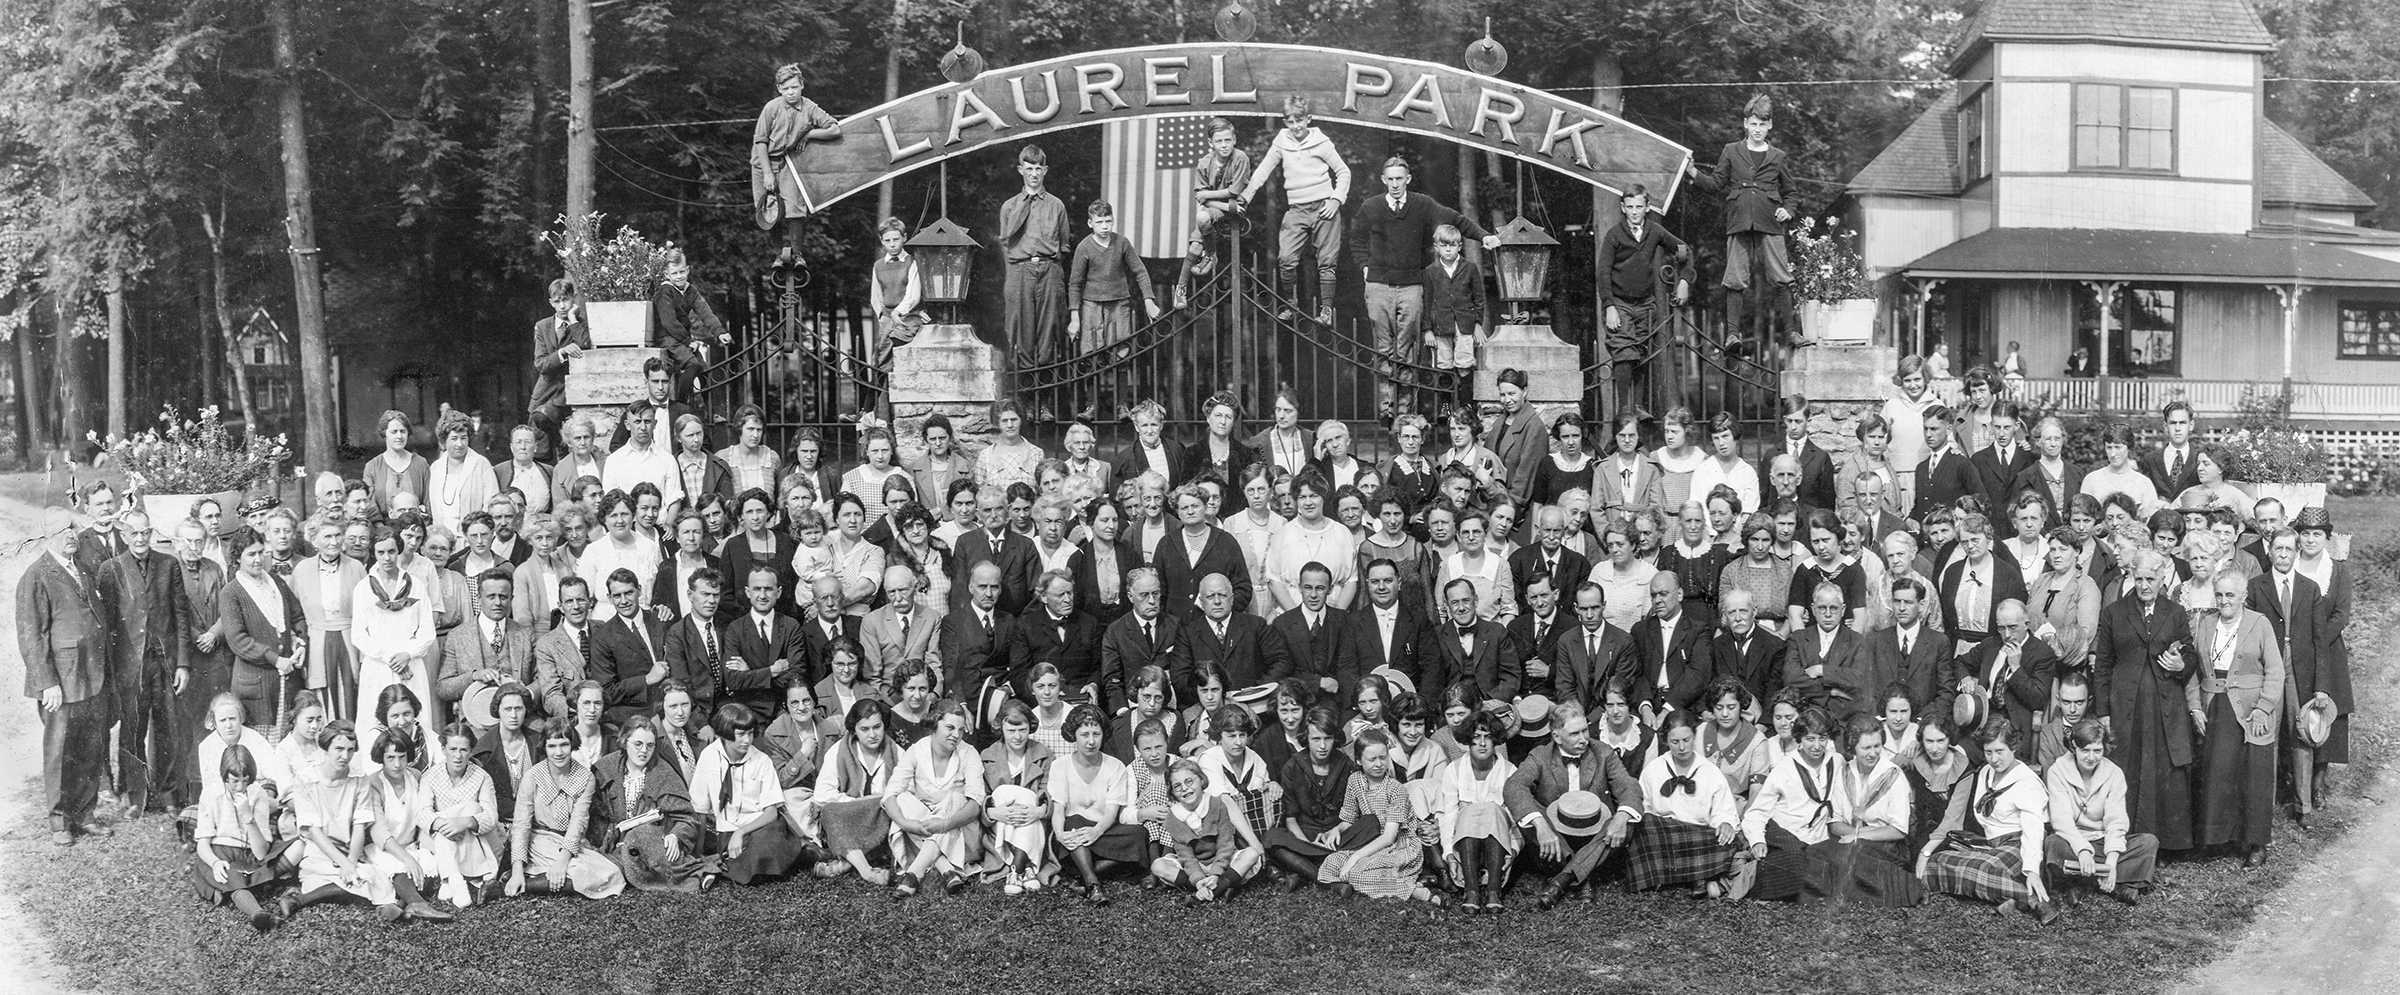 Laurel Park Celebrating 150 Years MondaySaturday, October 3rd29th